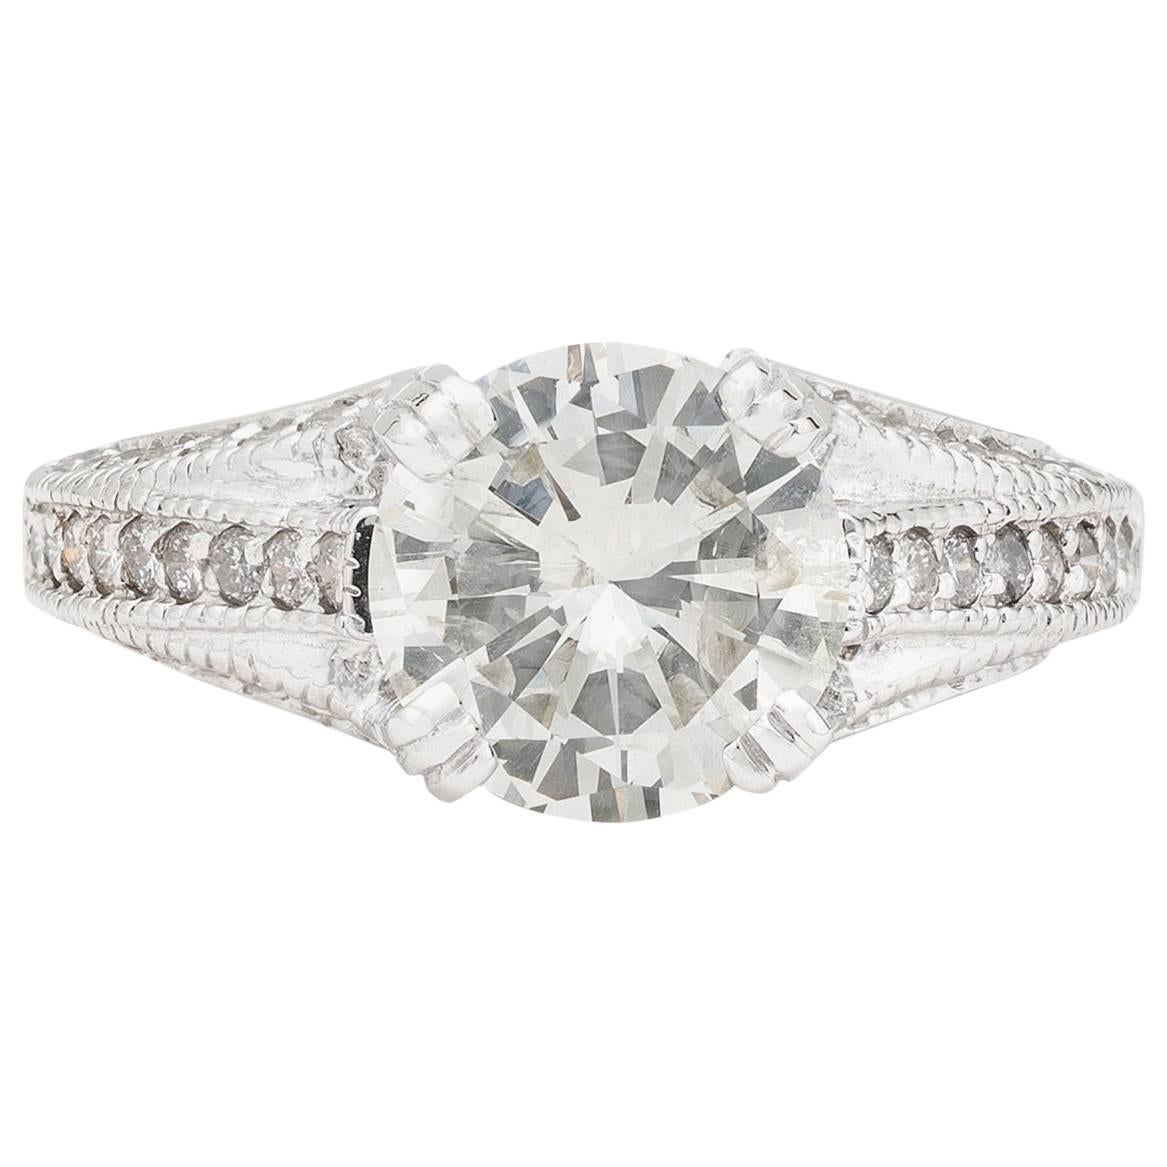 Estate Diamond Ring Featuring Impressive 2.39 Carat Round Diamond